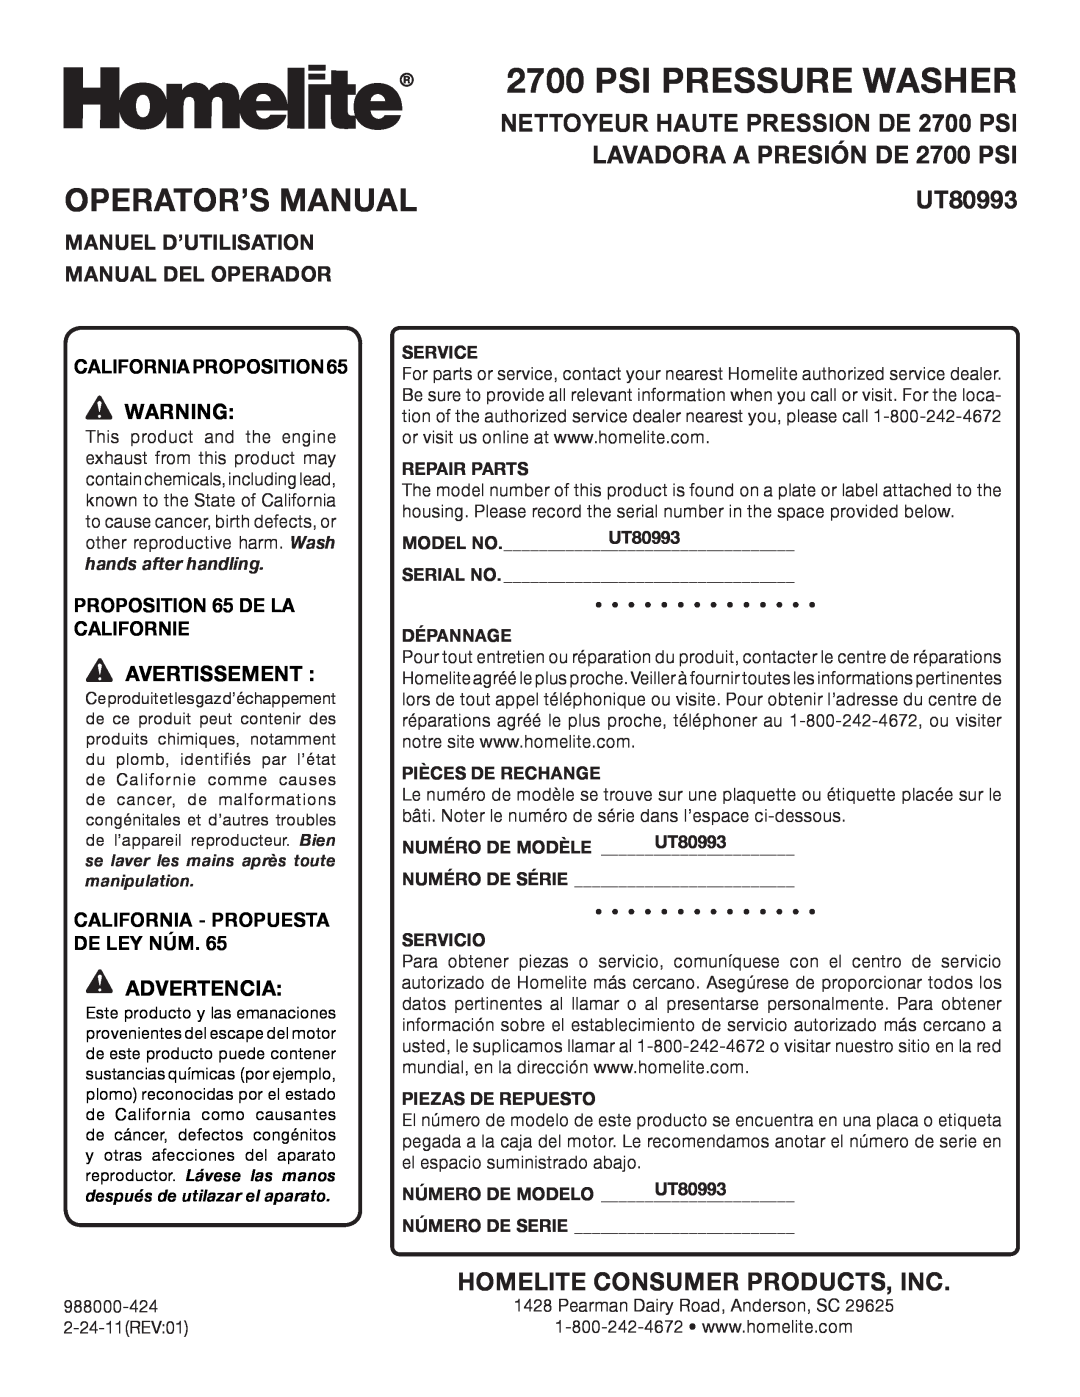 Homelite UT80993 Psi Pressure Washer, Operator’S Manual, LAVADORA A PRESIÓN DE 2700 PSI, Homelite Consumer Products, Inc 